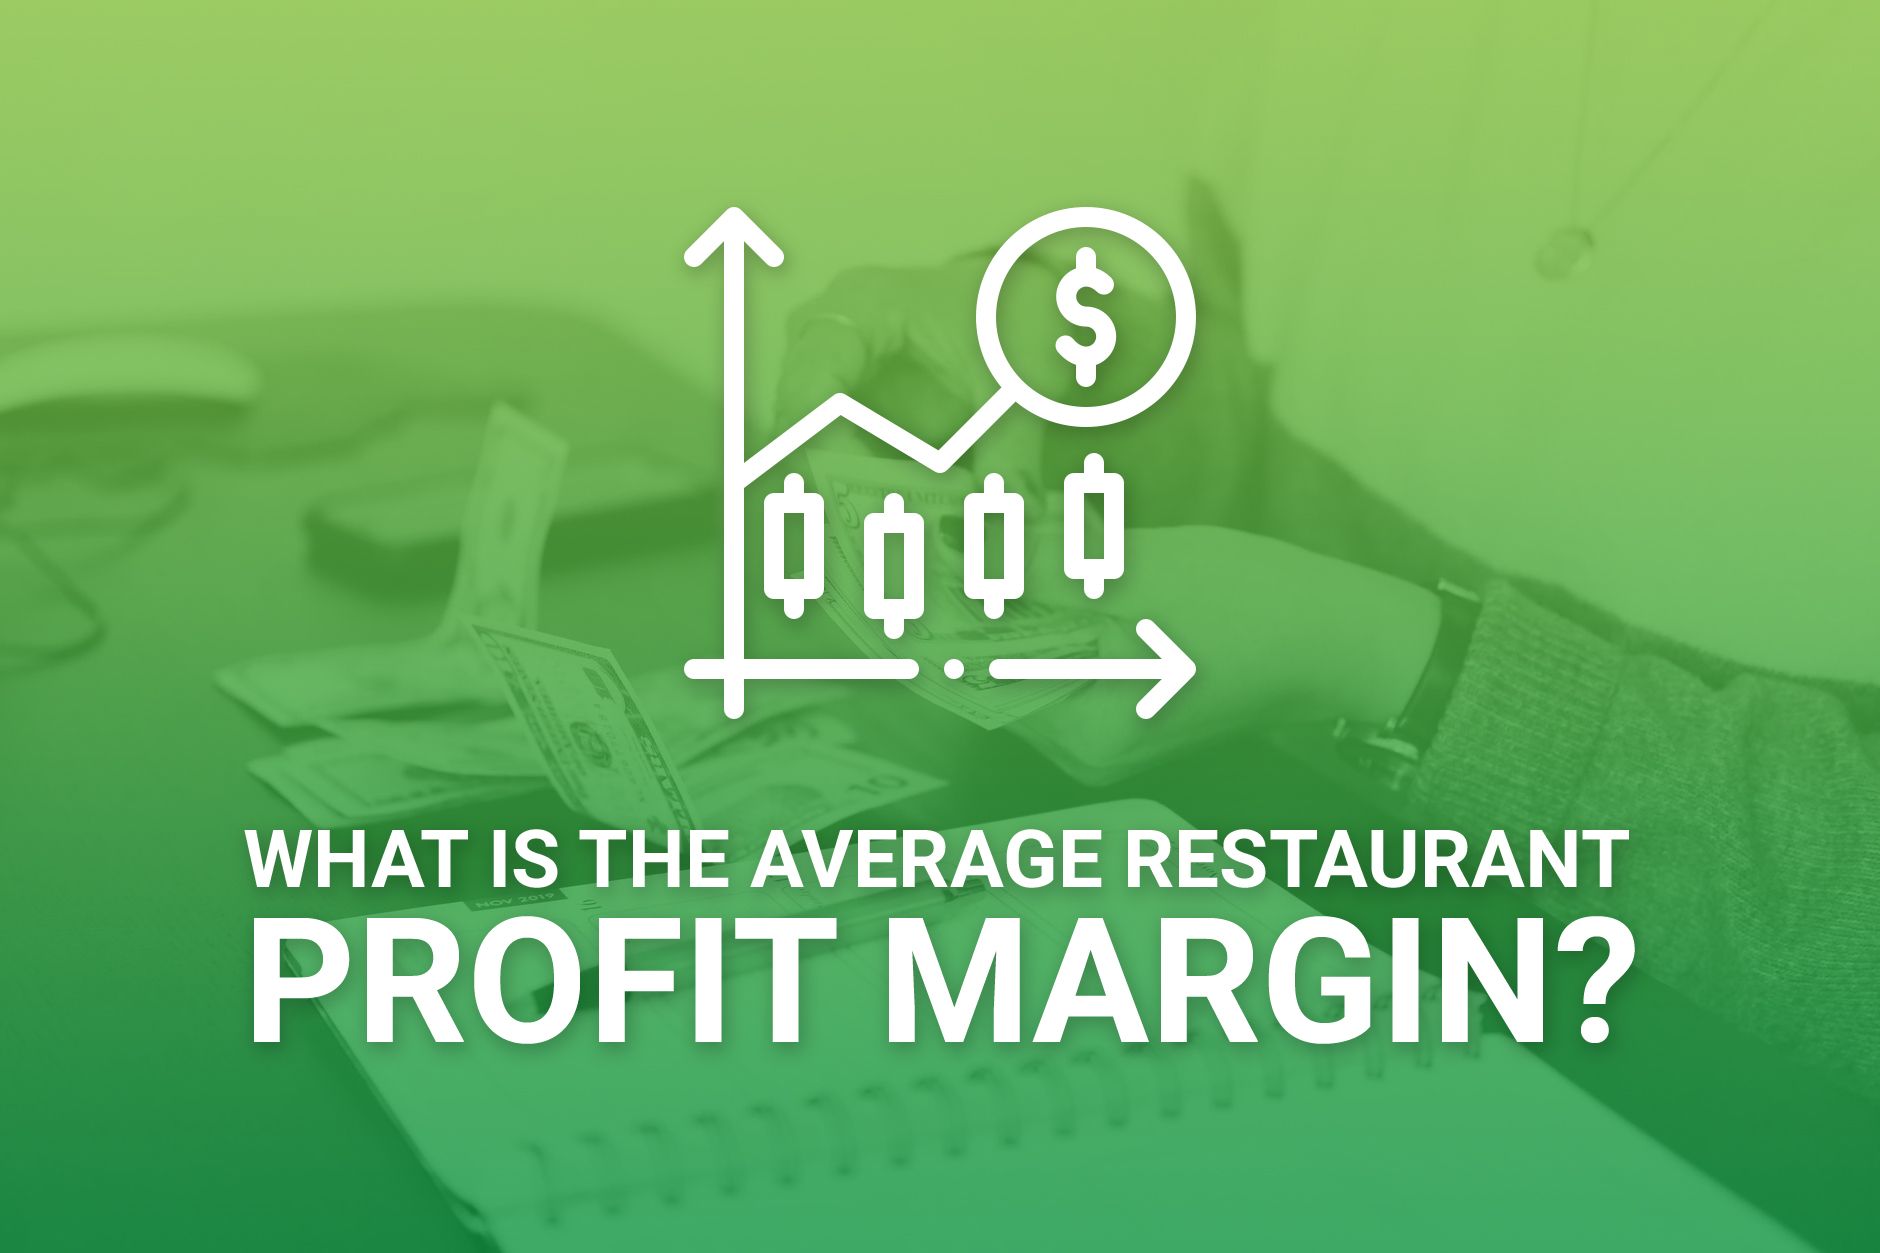 Average Restaurant Profit Margin